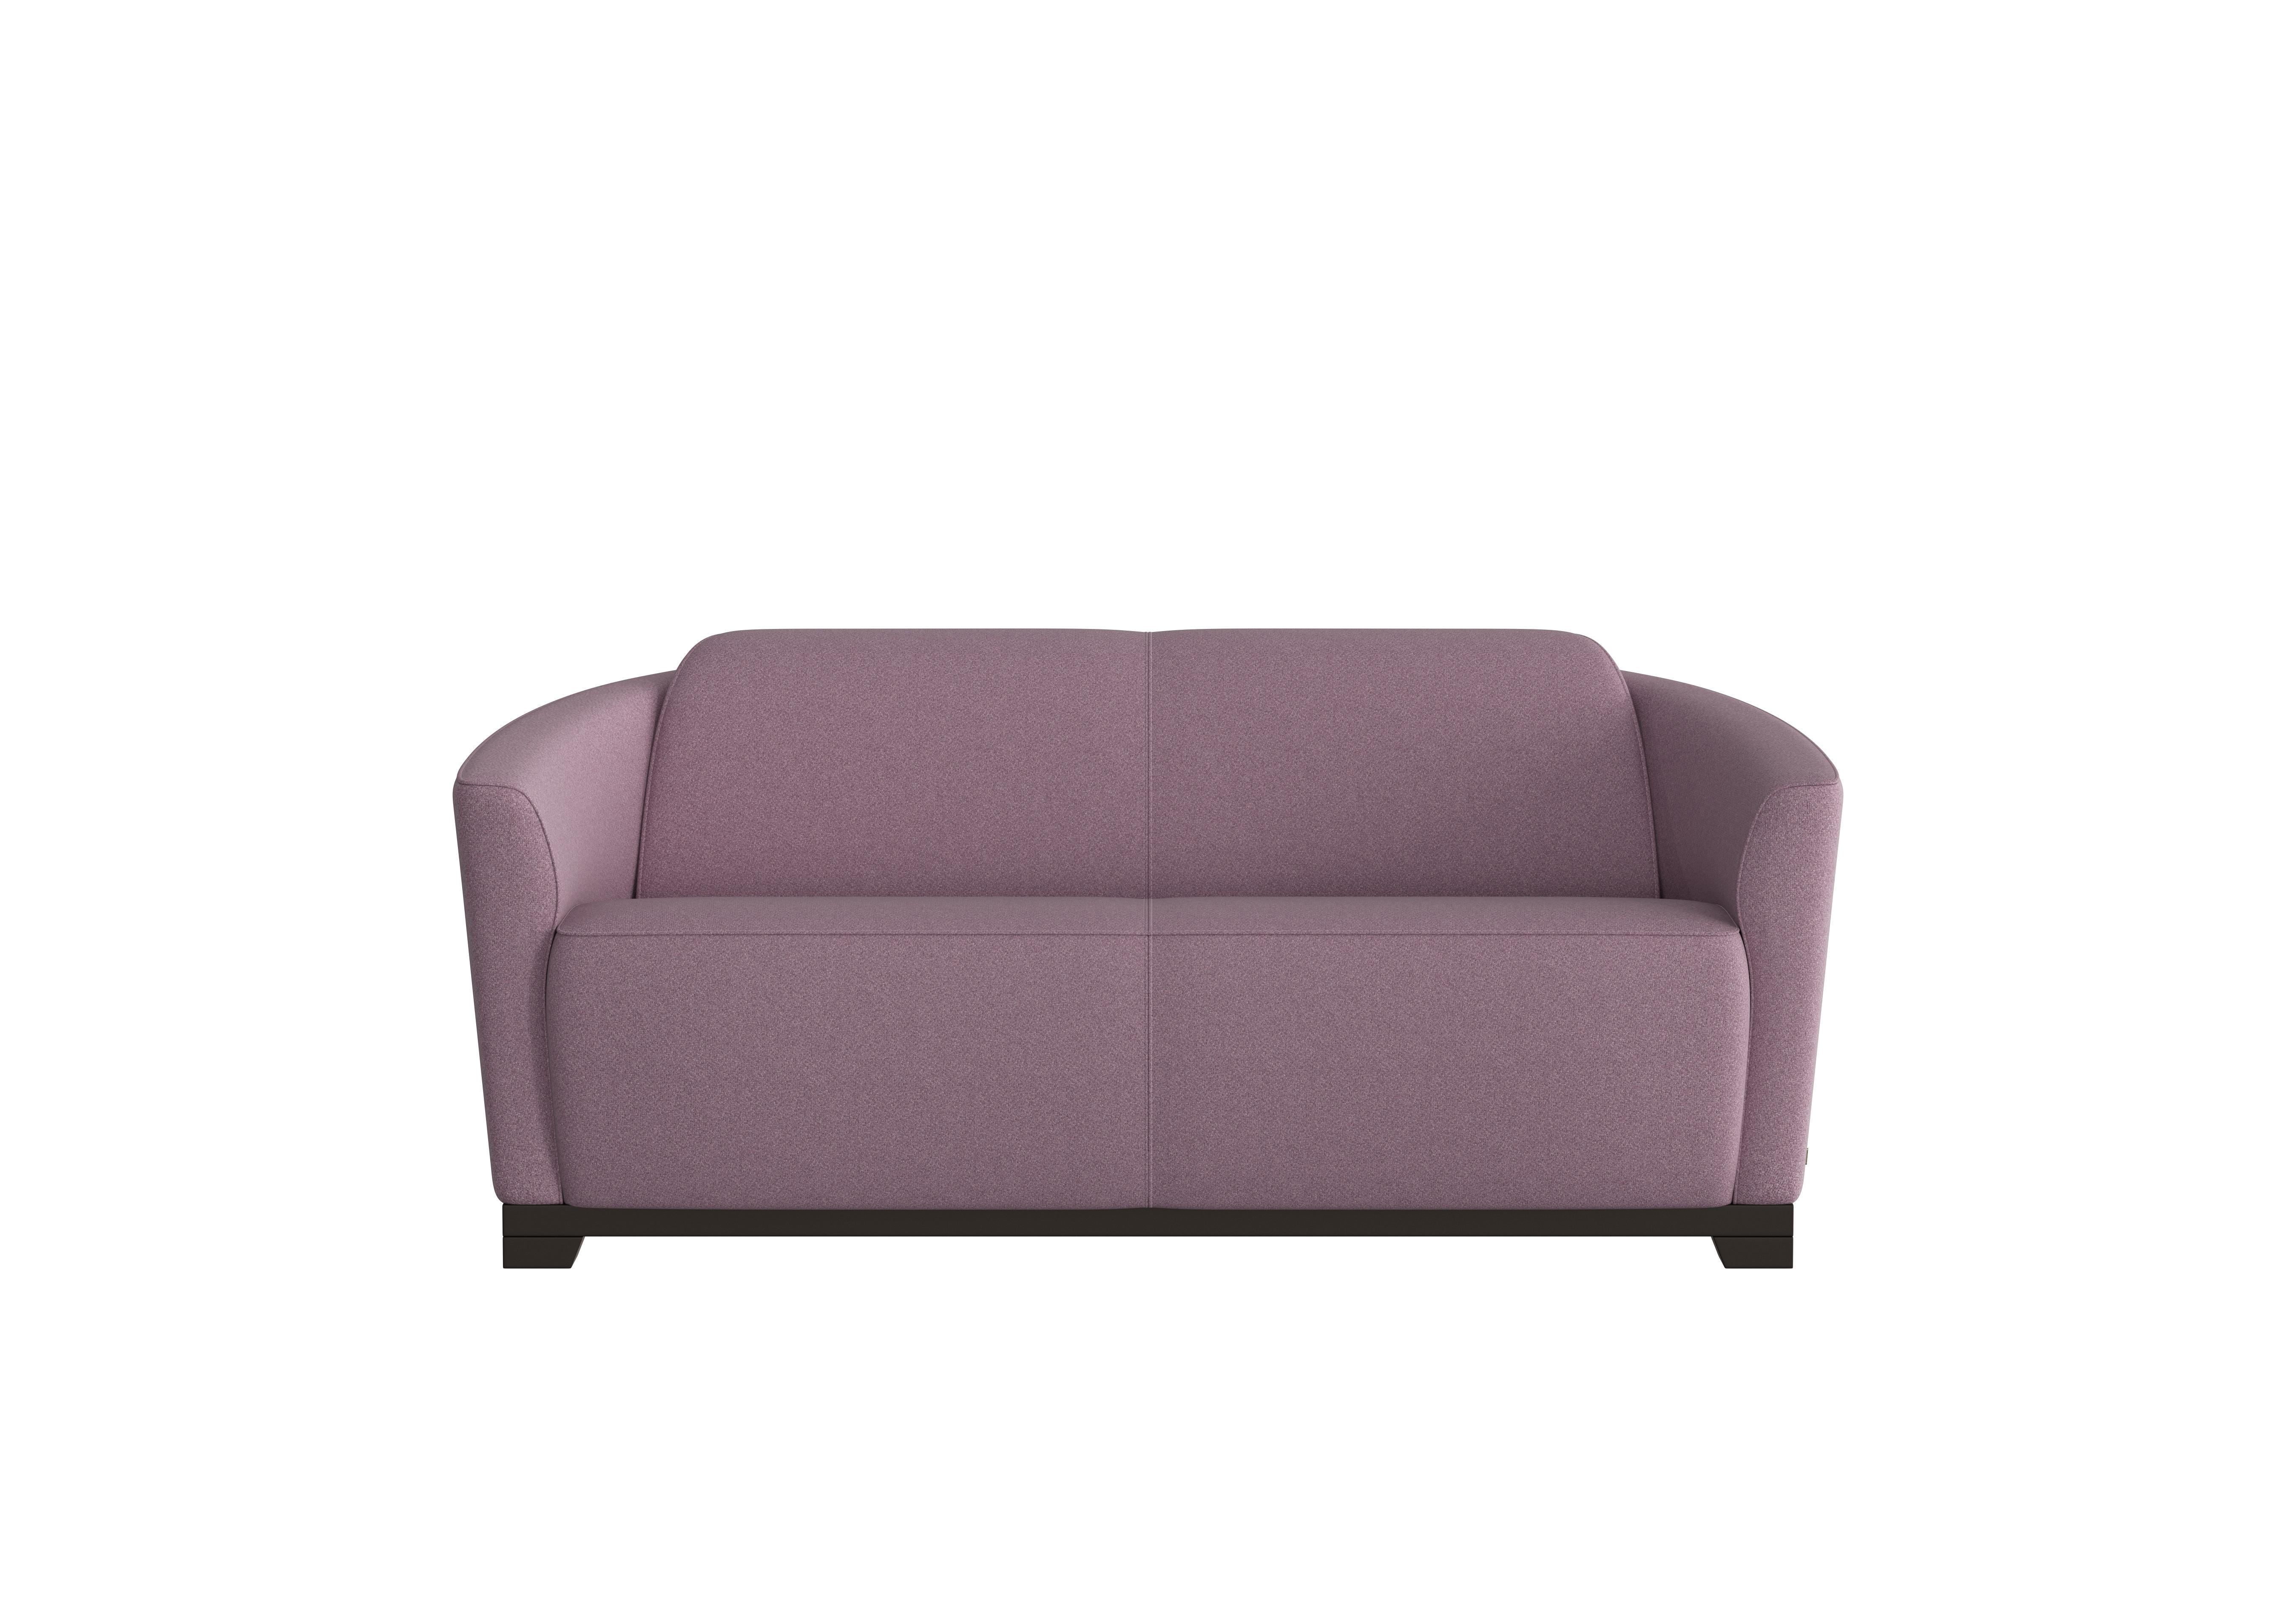 Ketty 2.5 Seater Fabric Sofa in Coupe Glicine 003 on Furniture Village